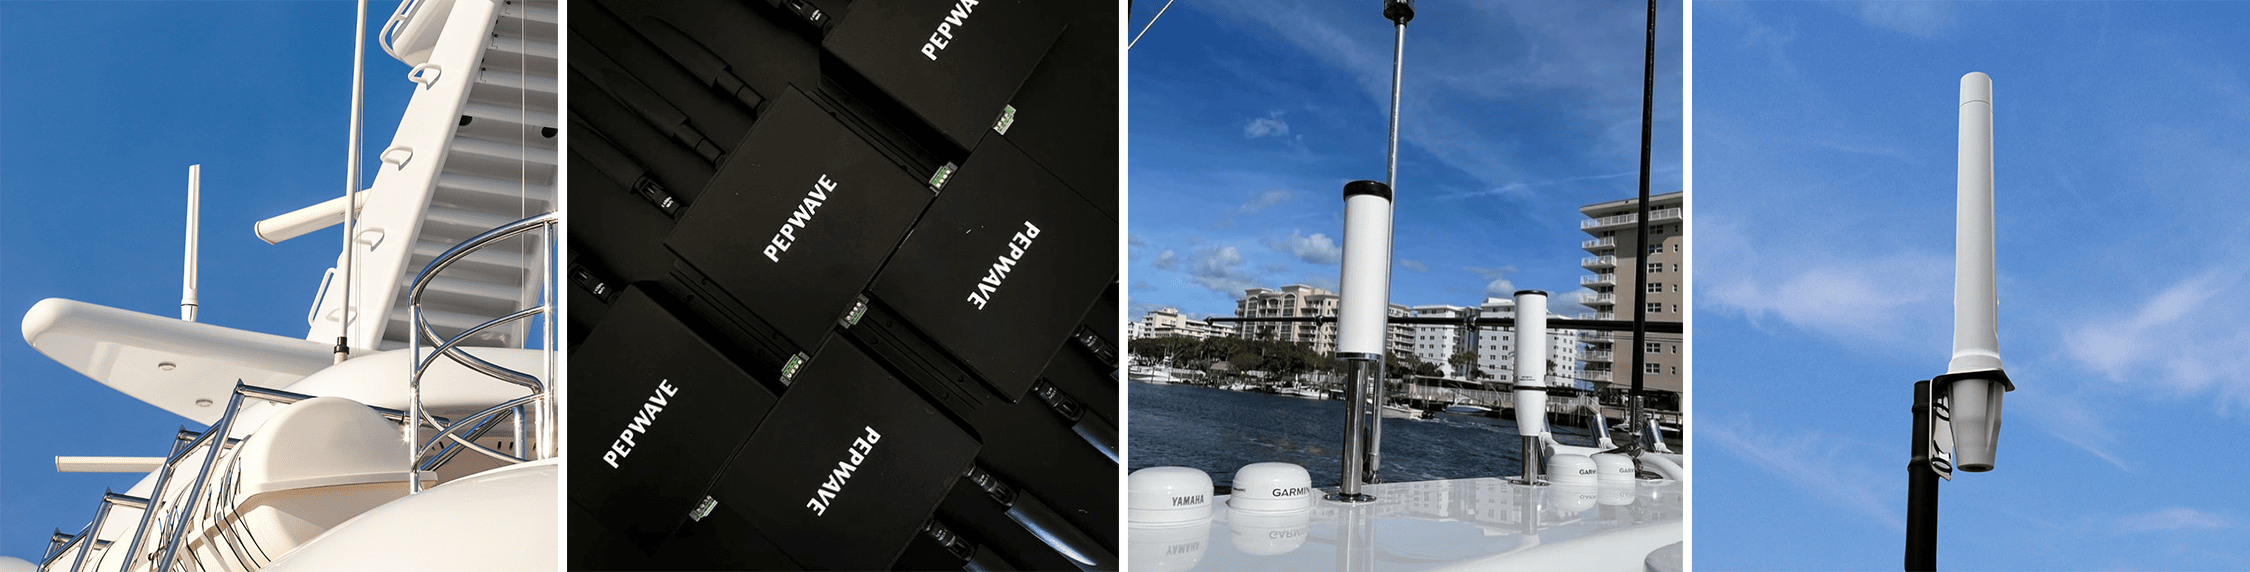 Amplificadores Wifi Marinos | Amplificadores de señal de células marinas